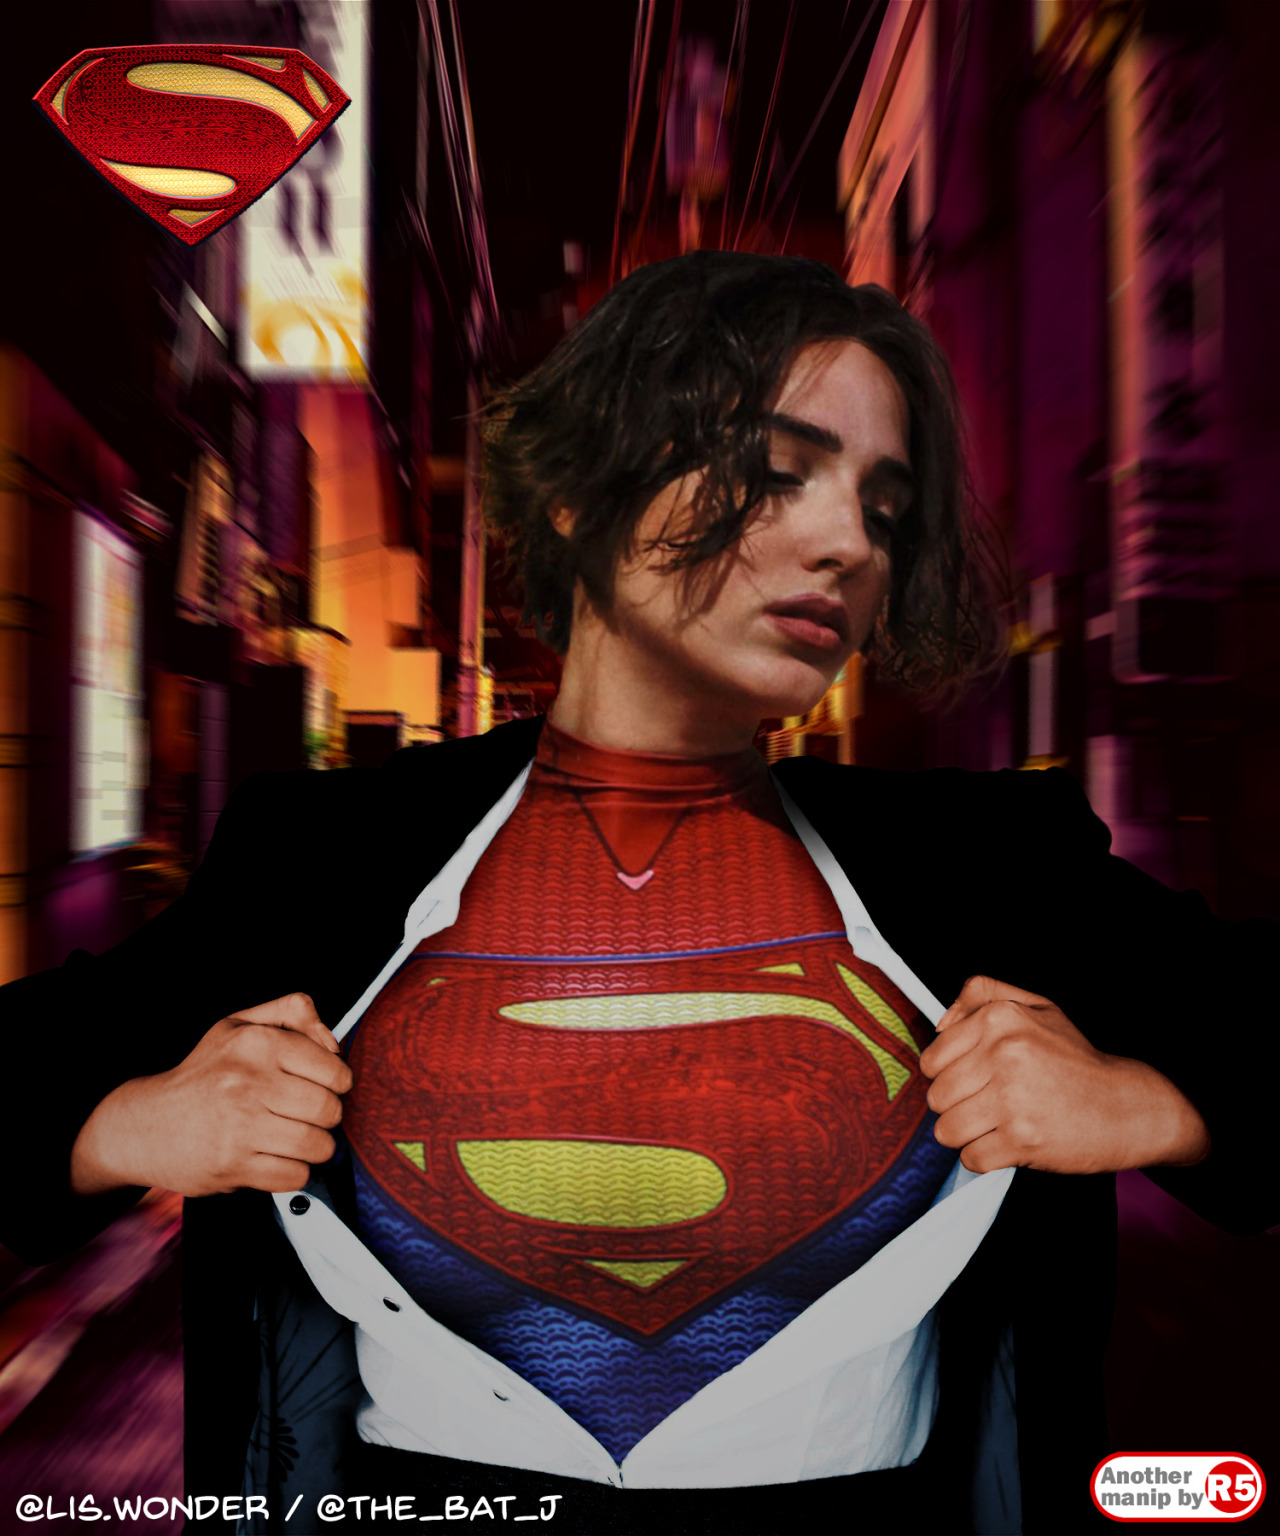 Sasha Calle As Supergirl Wallpapers